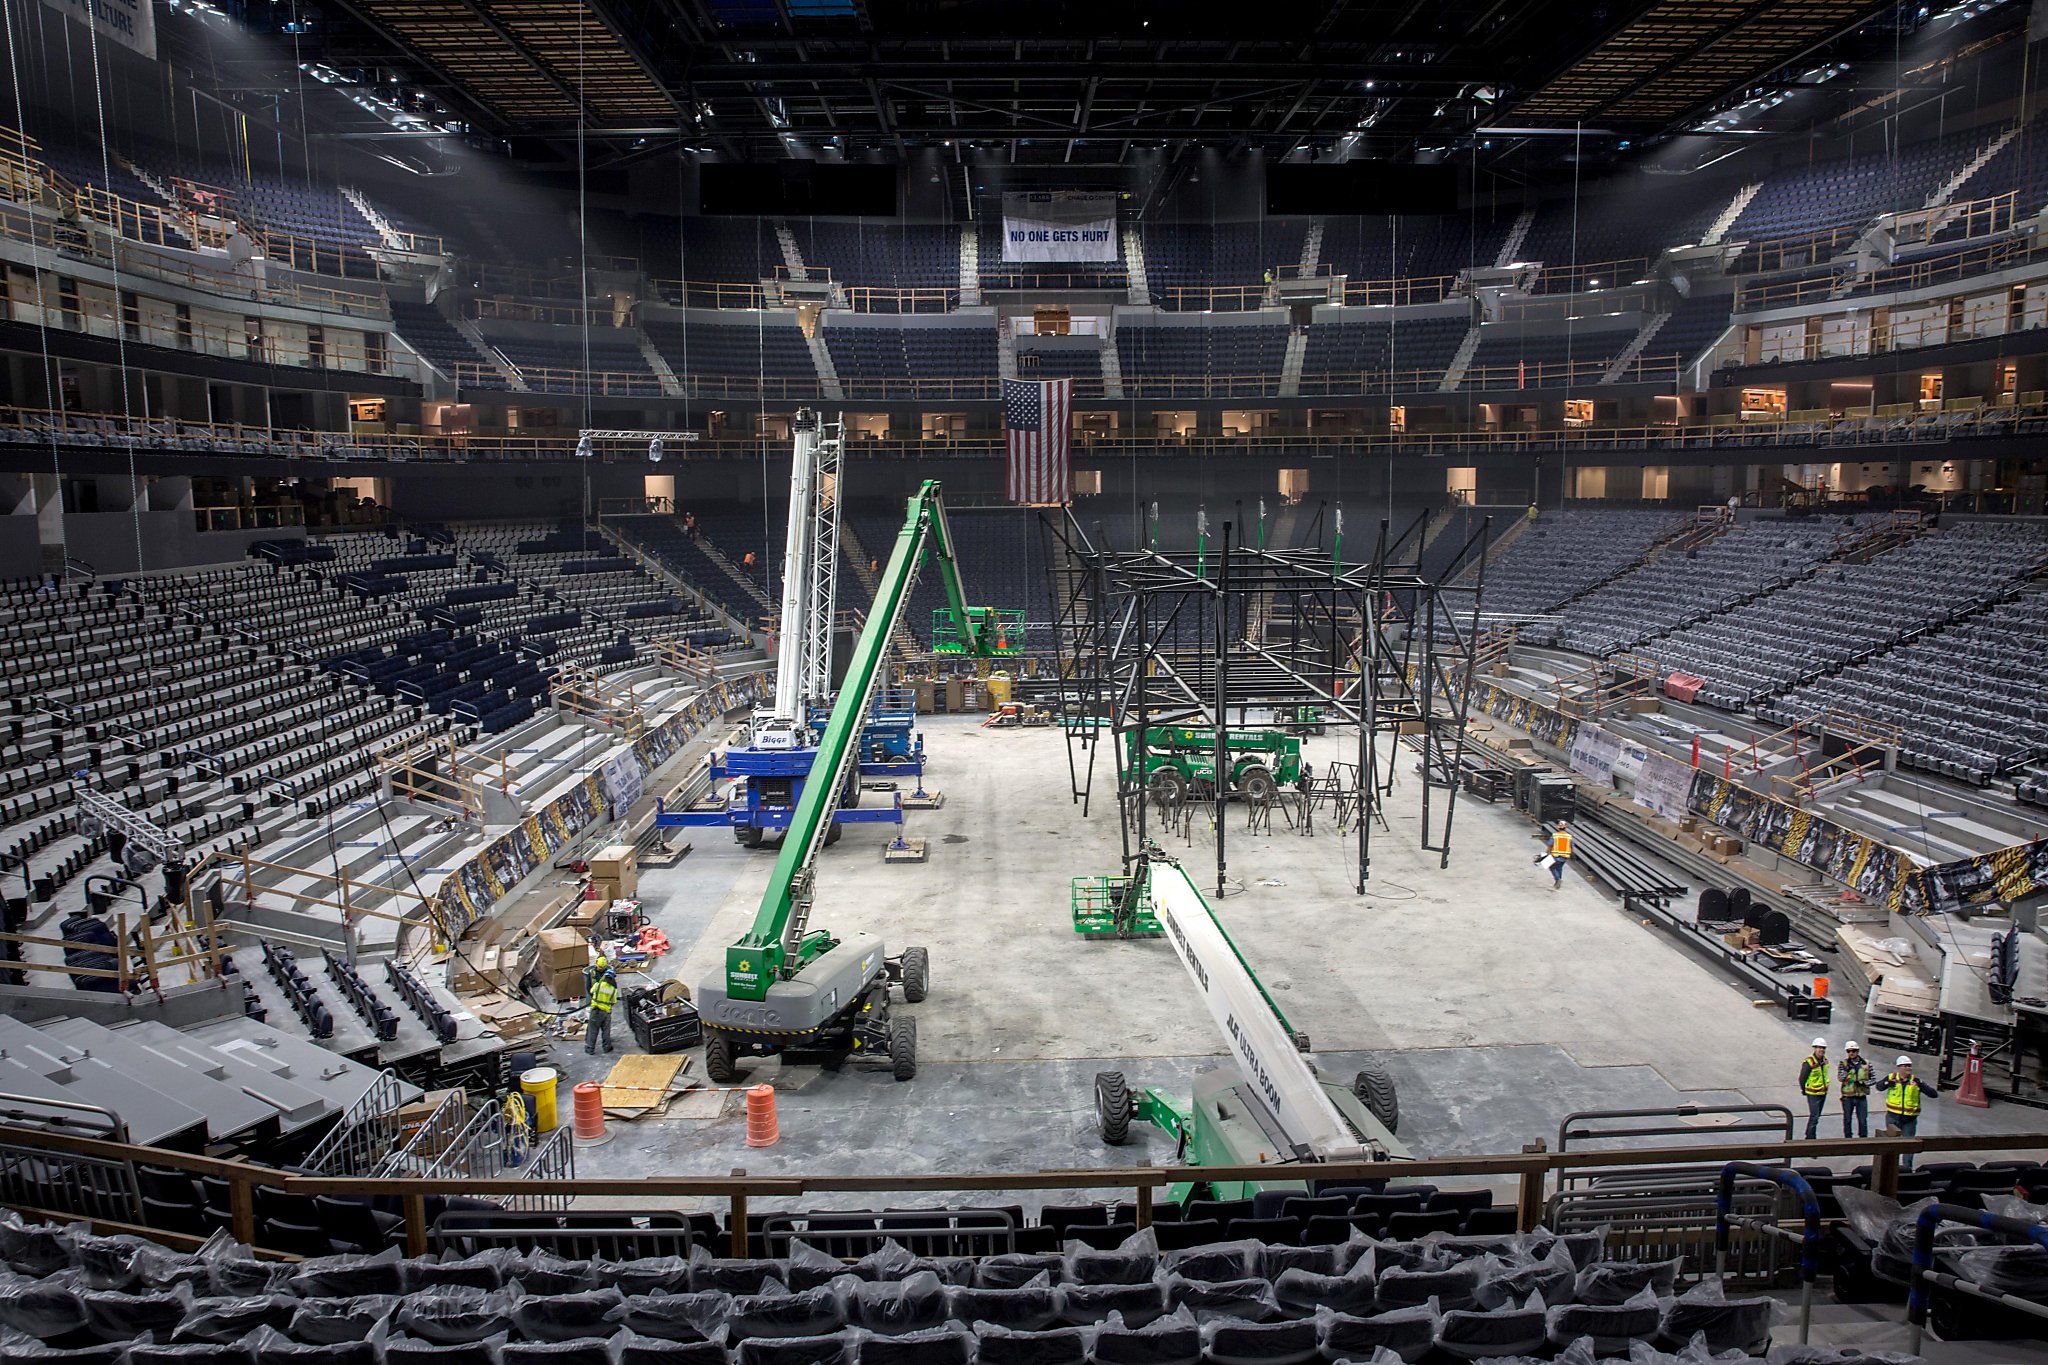 Inside Chase Center, San Francisco's New, $1.4 Billion Warriors Arena